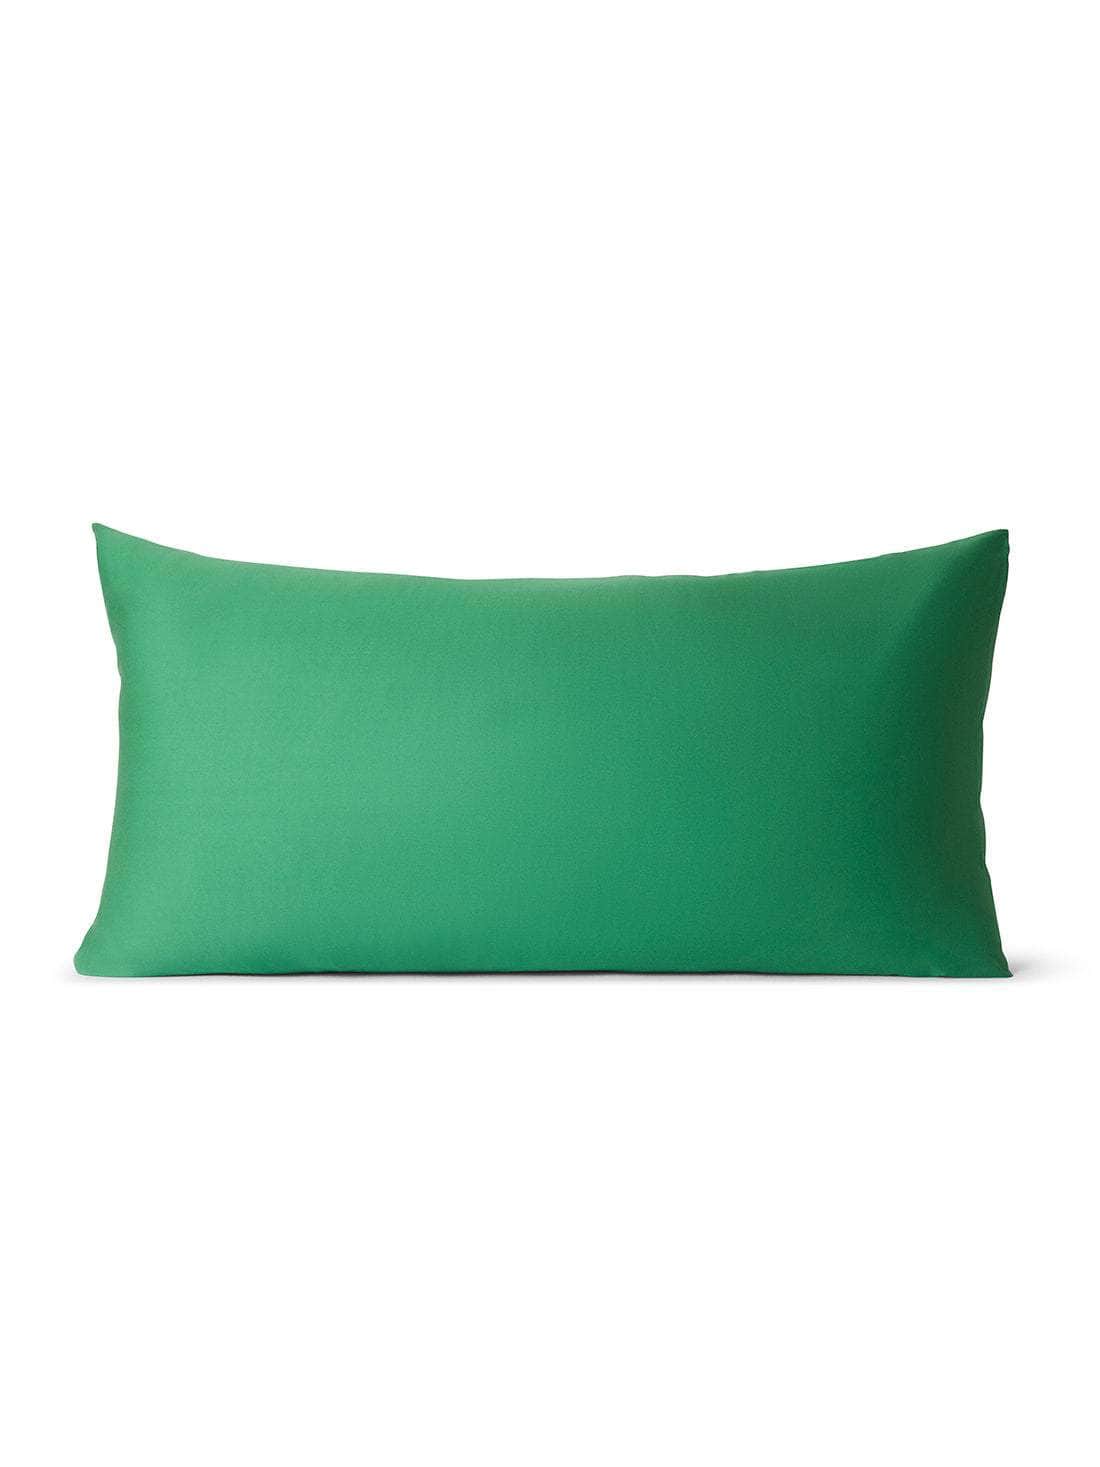 Child's Medium Pillowcase | Set of 2